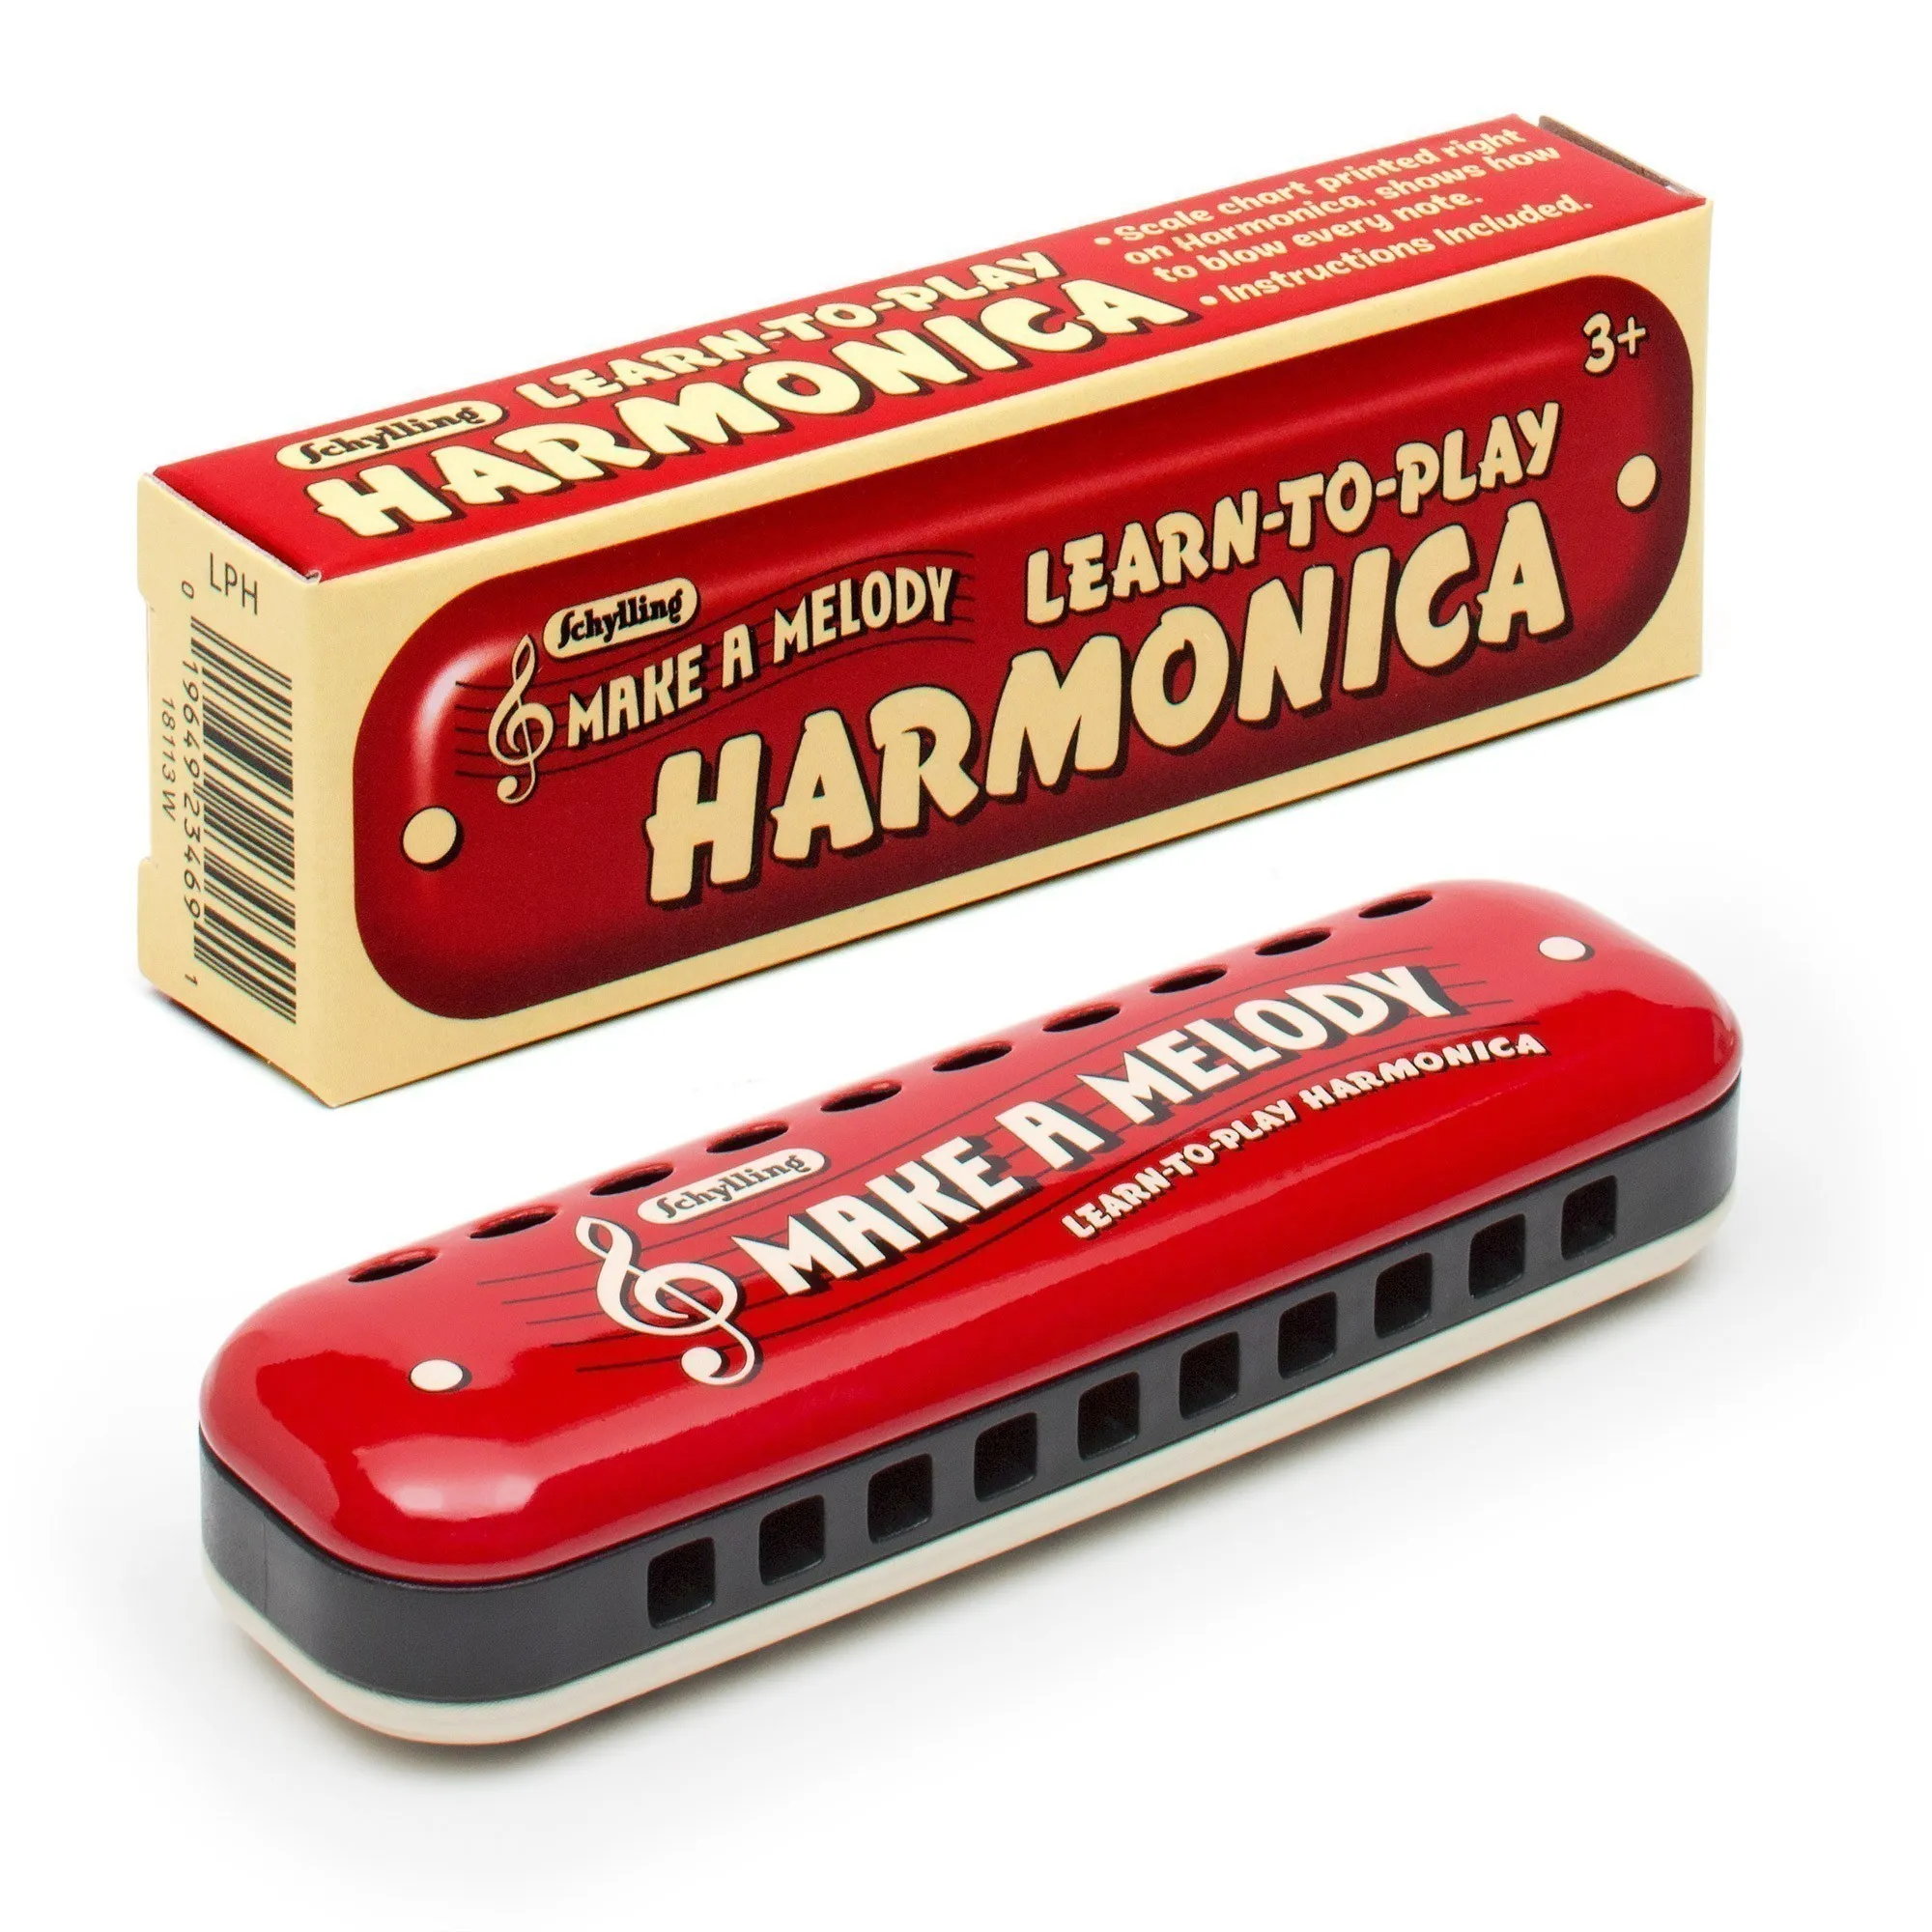 how to play harmonica